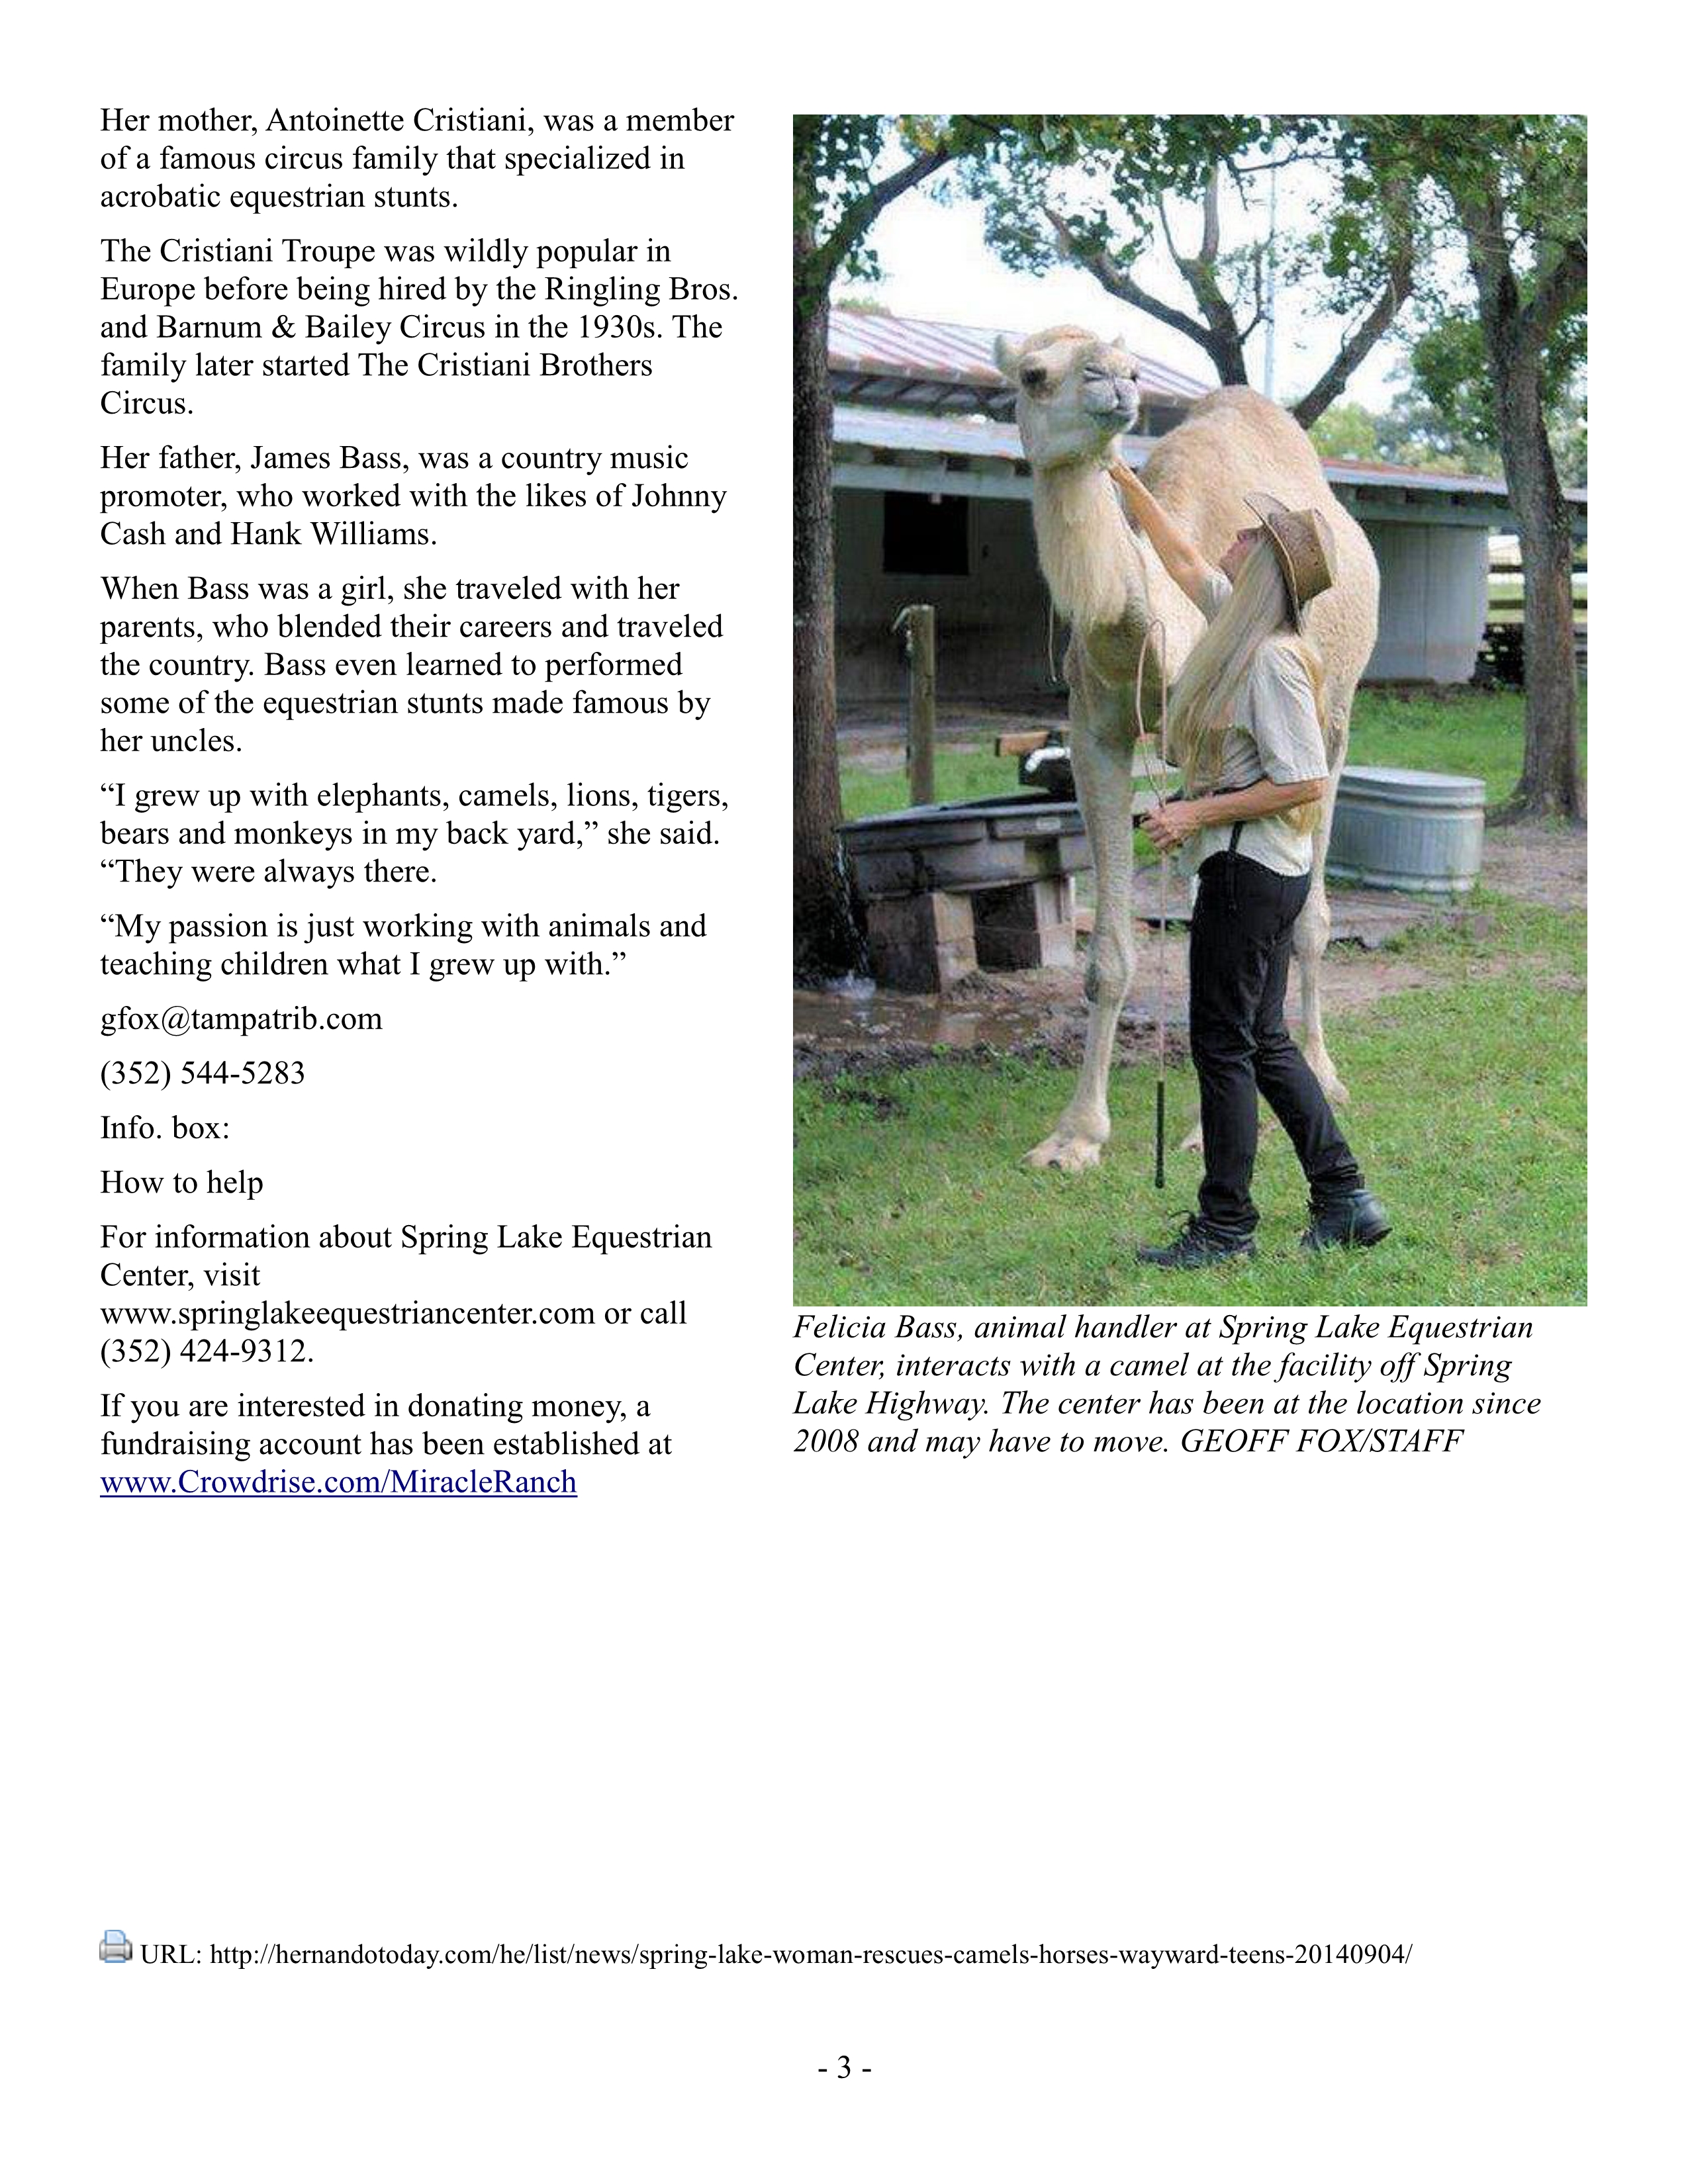 Spring Lake woman rescues camels, horses, wayward teens 09-04-2014 Pg3